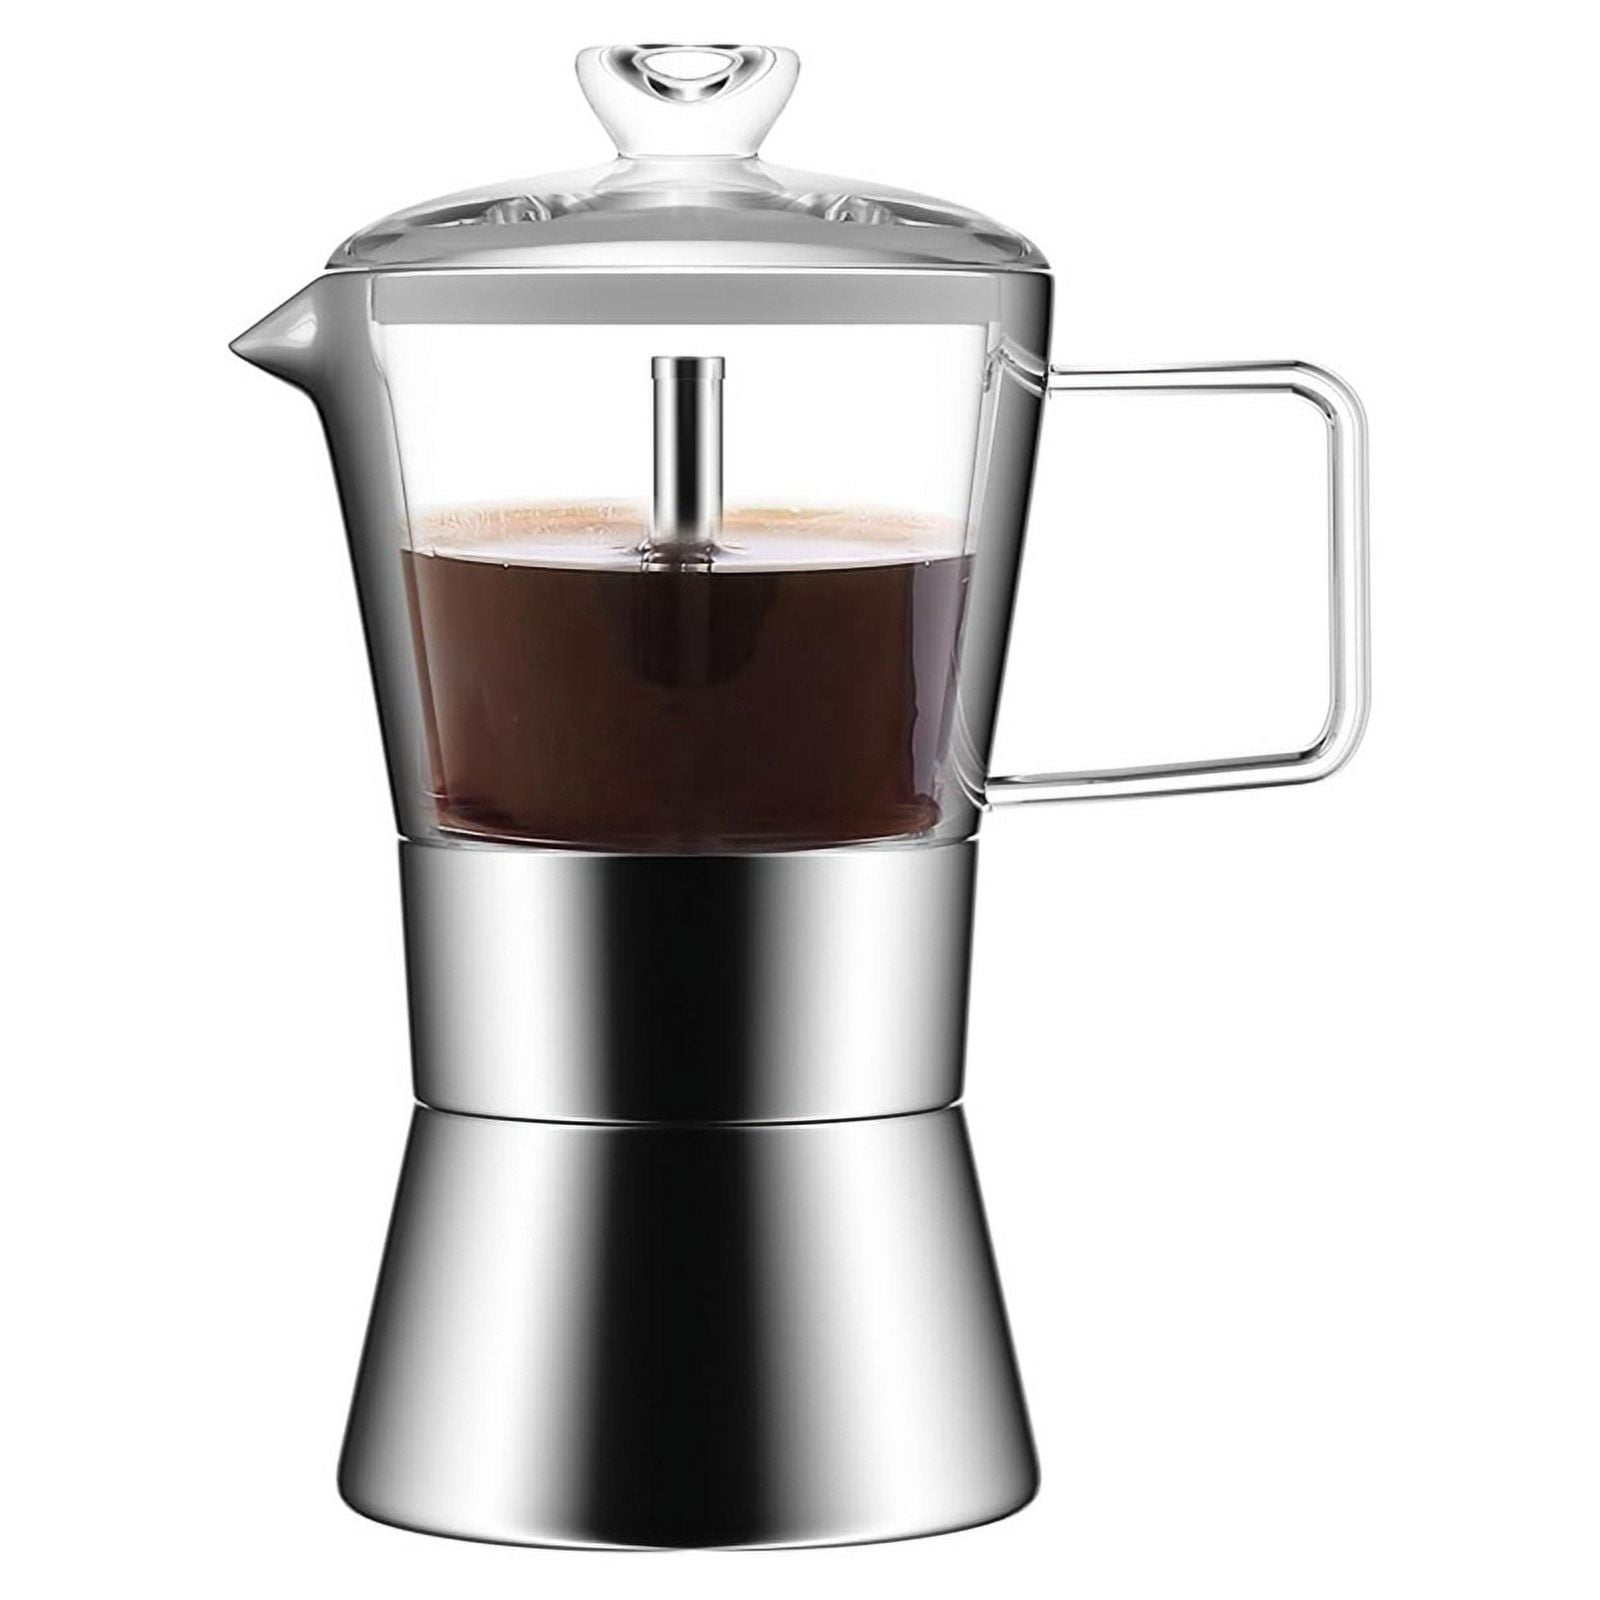 AGARO Royal Moka Pot,Stovetop & Induction Cooktop Classic Espresso &Coffee  Maker